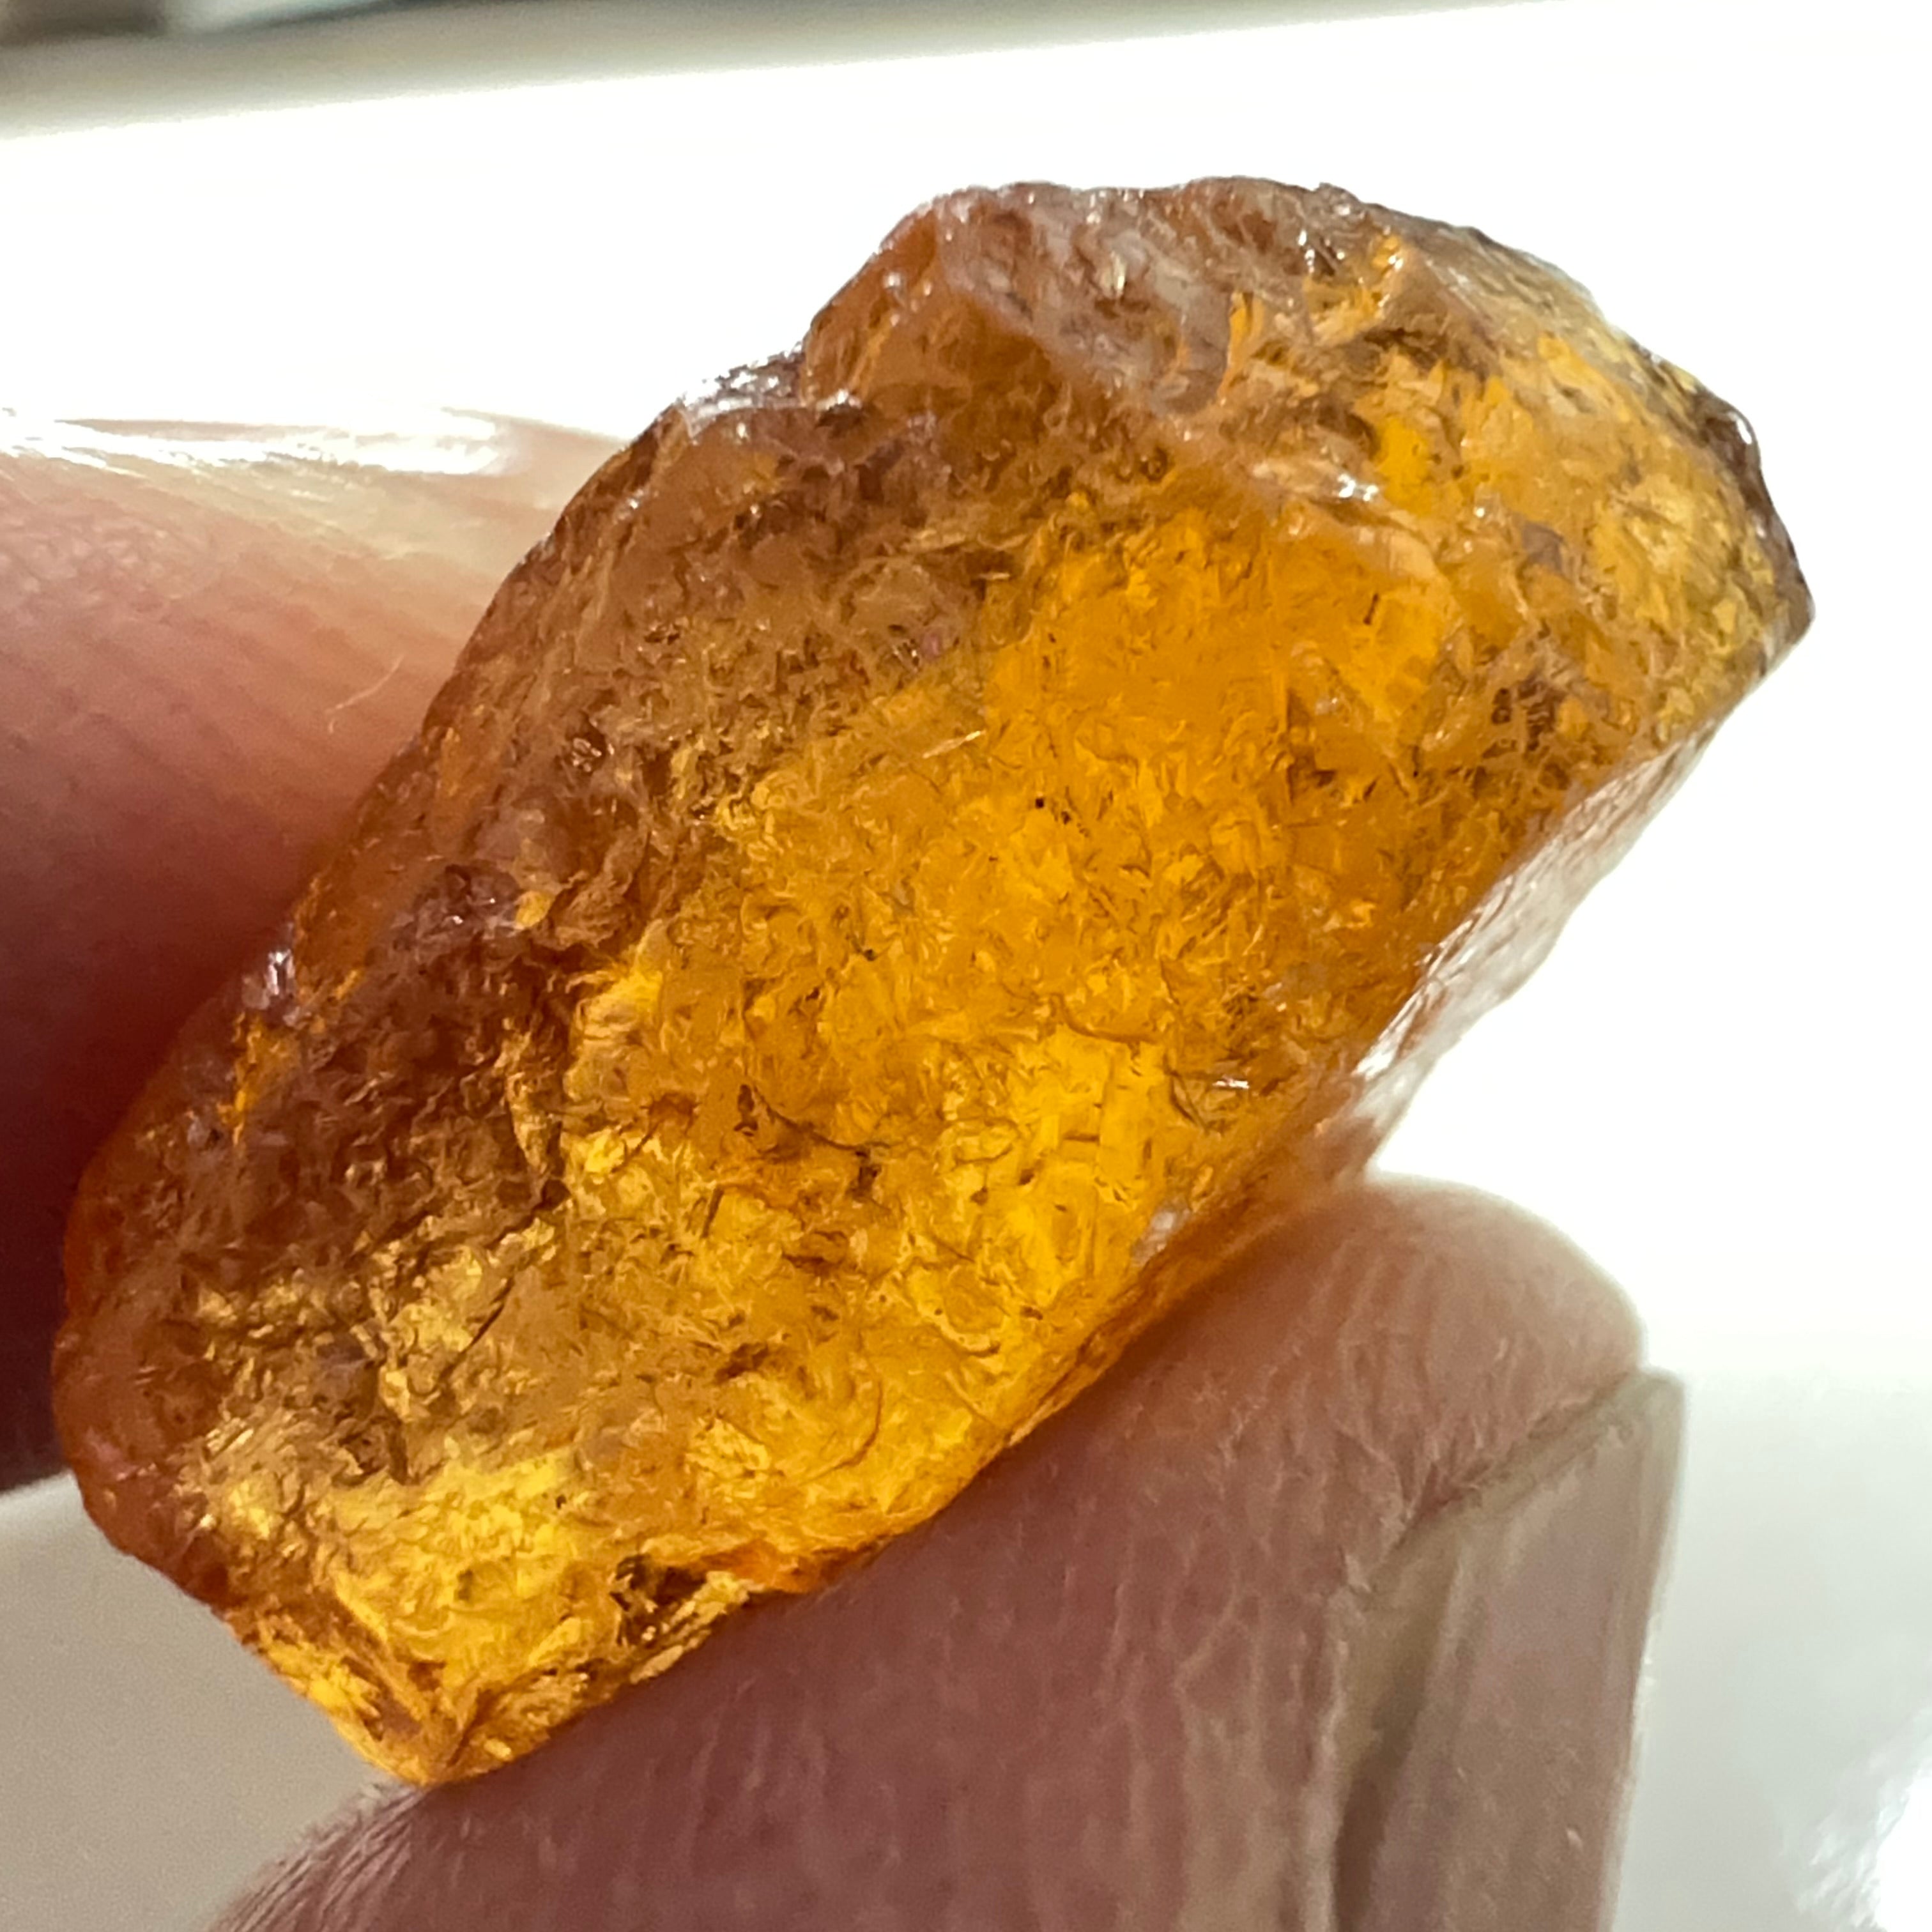 17.77ct Mandarin Spessartite Garnet, Loliondo, Tanzania. Untreated Unheated. Slight 2mm inclusion on one end of the stone rest slight sugar